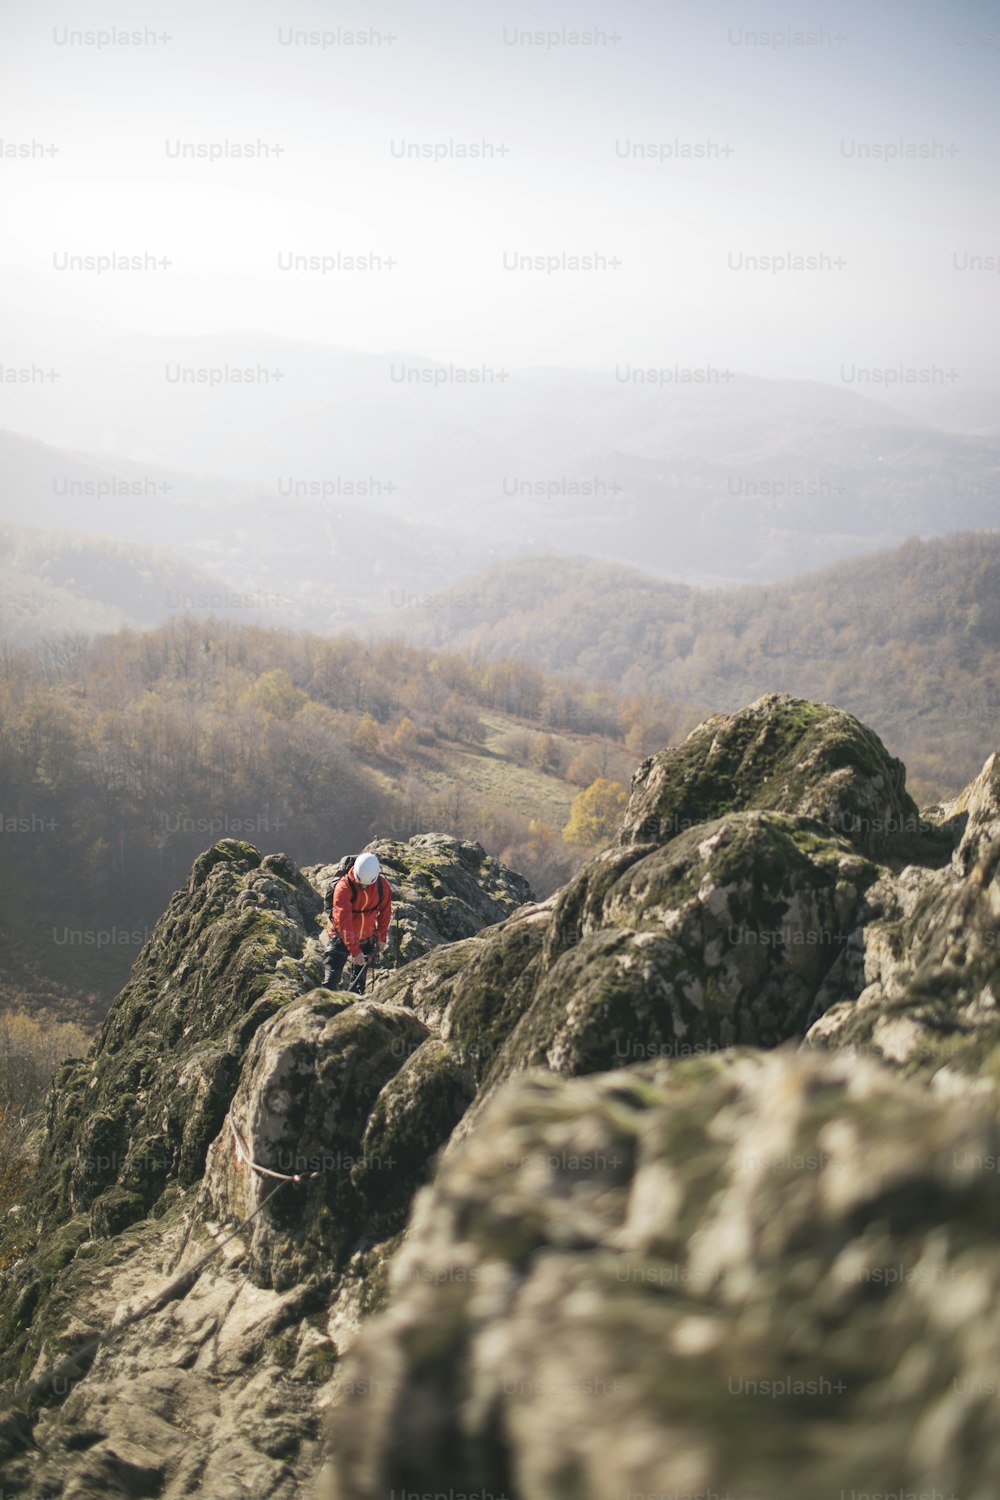 Hombre totalmente equipado escalando montaña a lo largo de una vía ferrata.